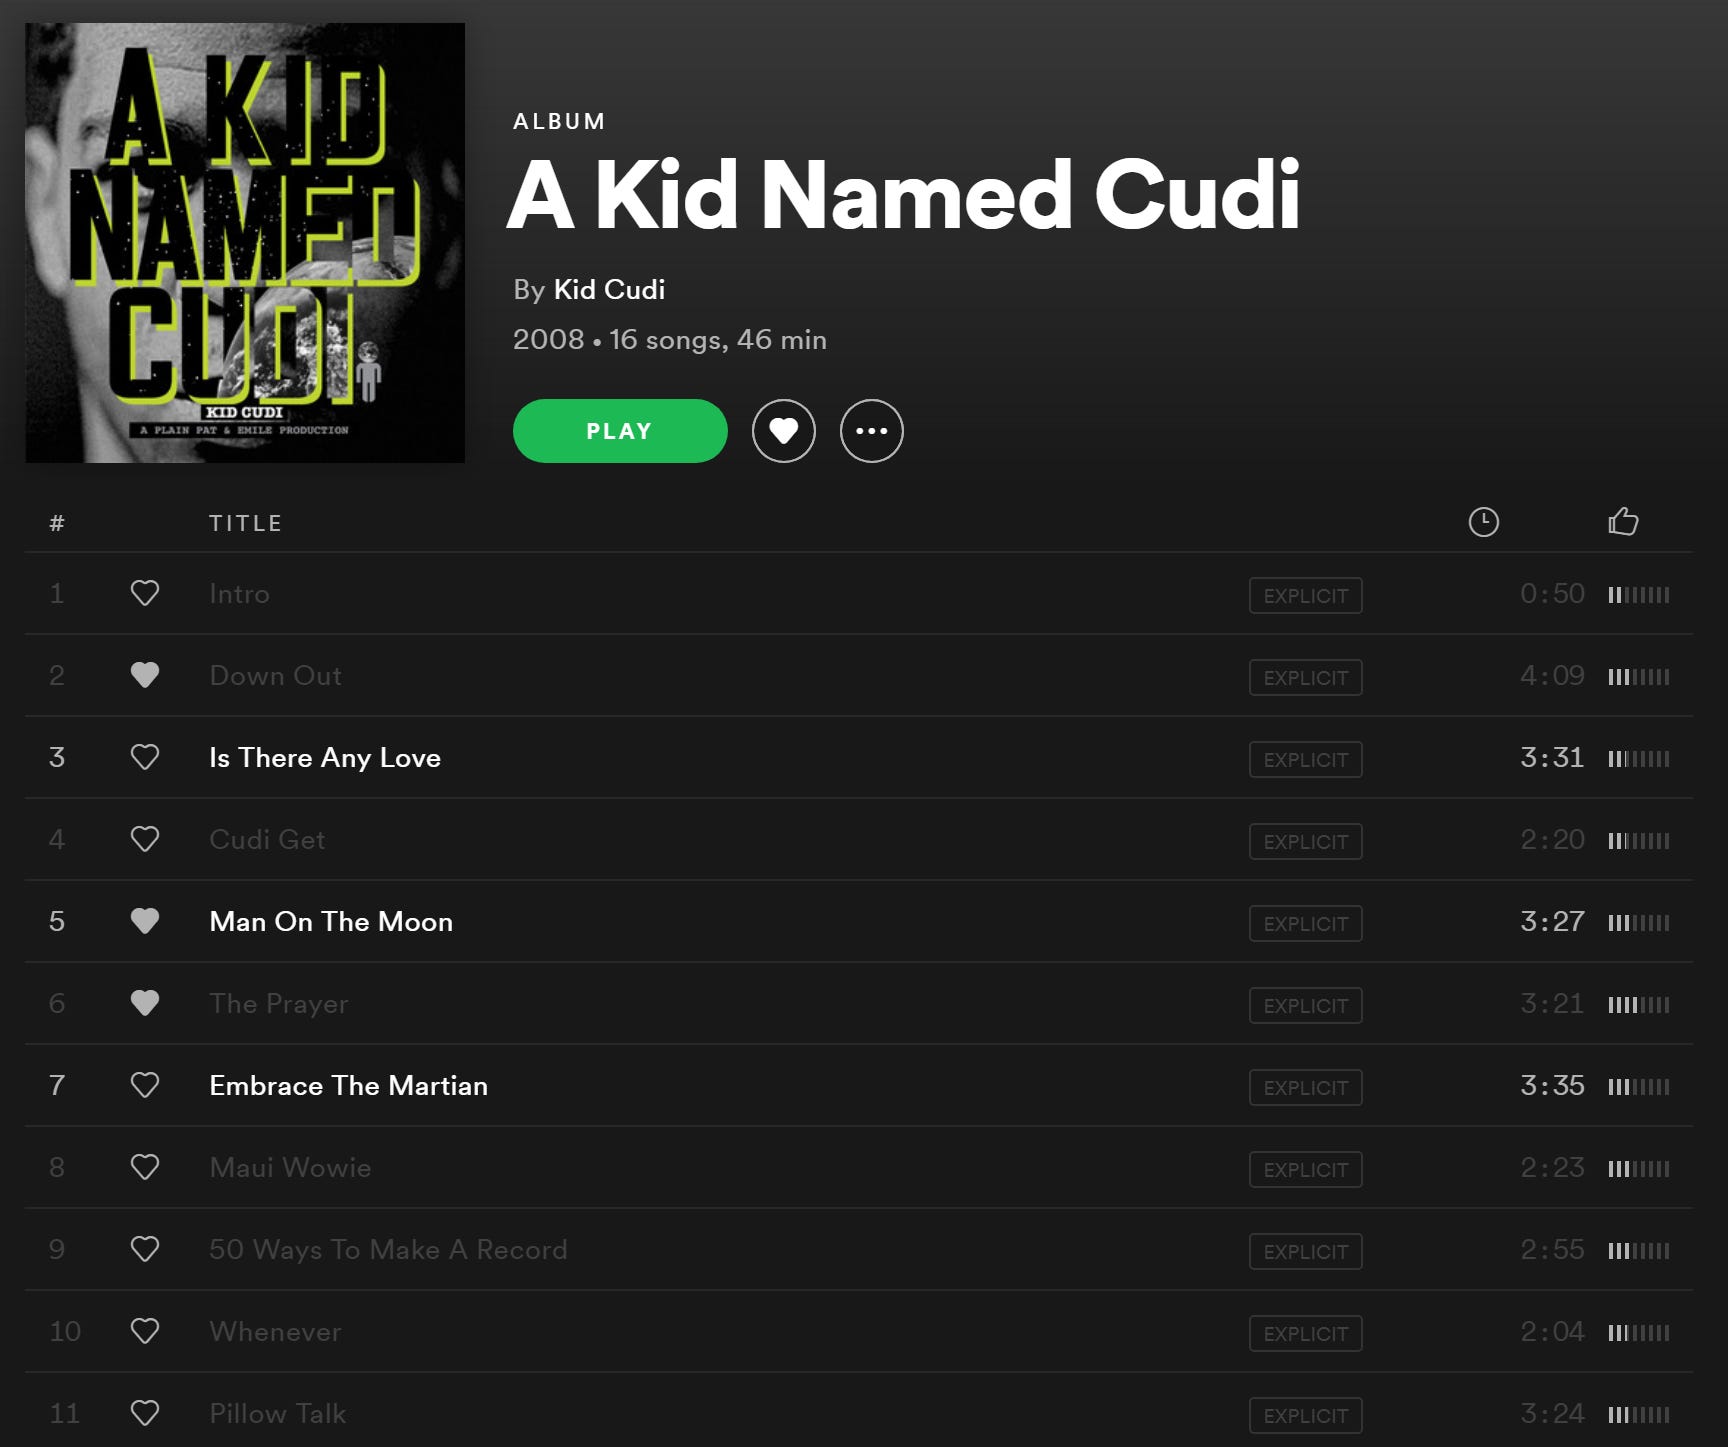 A Kid Named Cudi has been taken off Spotify. : r/KidCudi